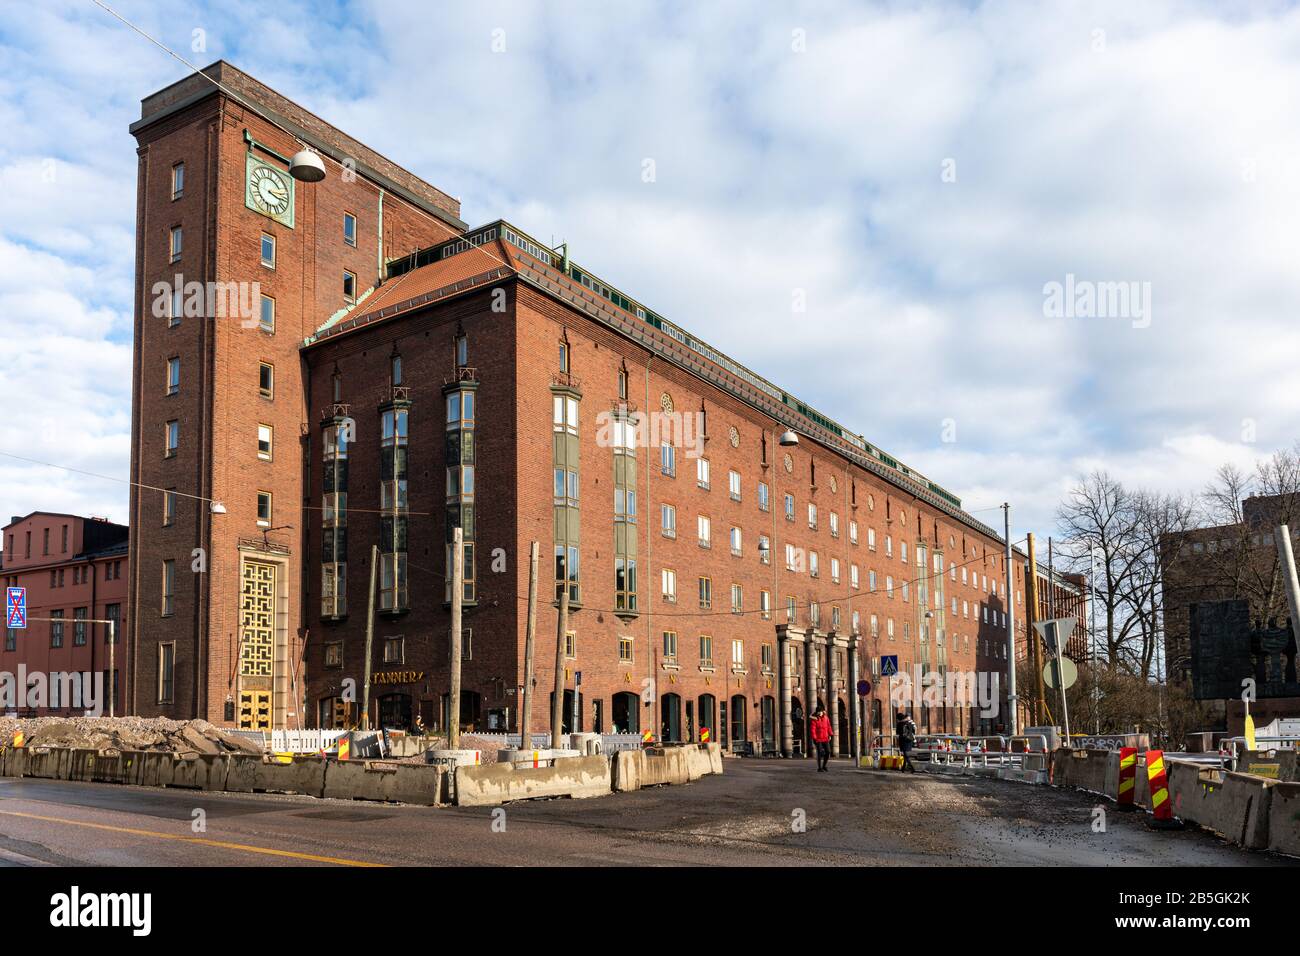 So called Elanto block, former head office building of Elanto retailing cooperative organisation in Helsinki, Finland Stock Photo